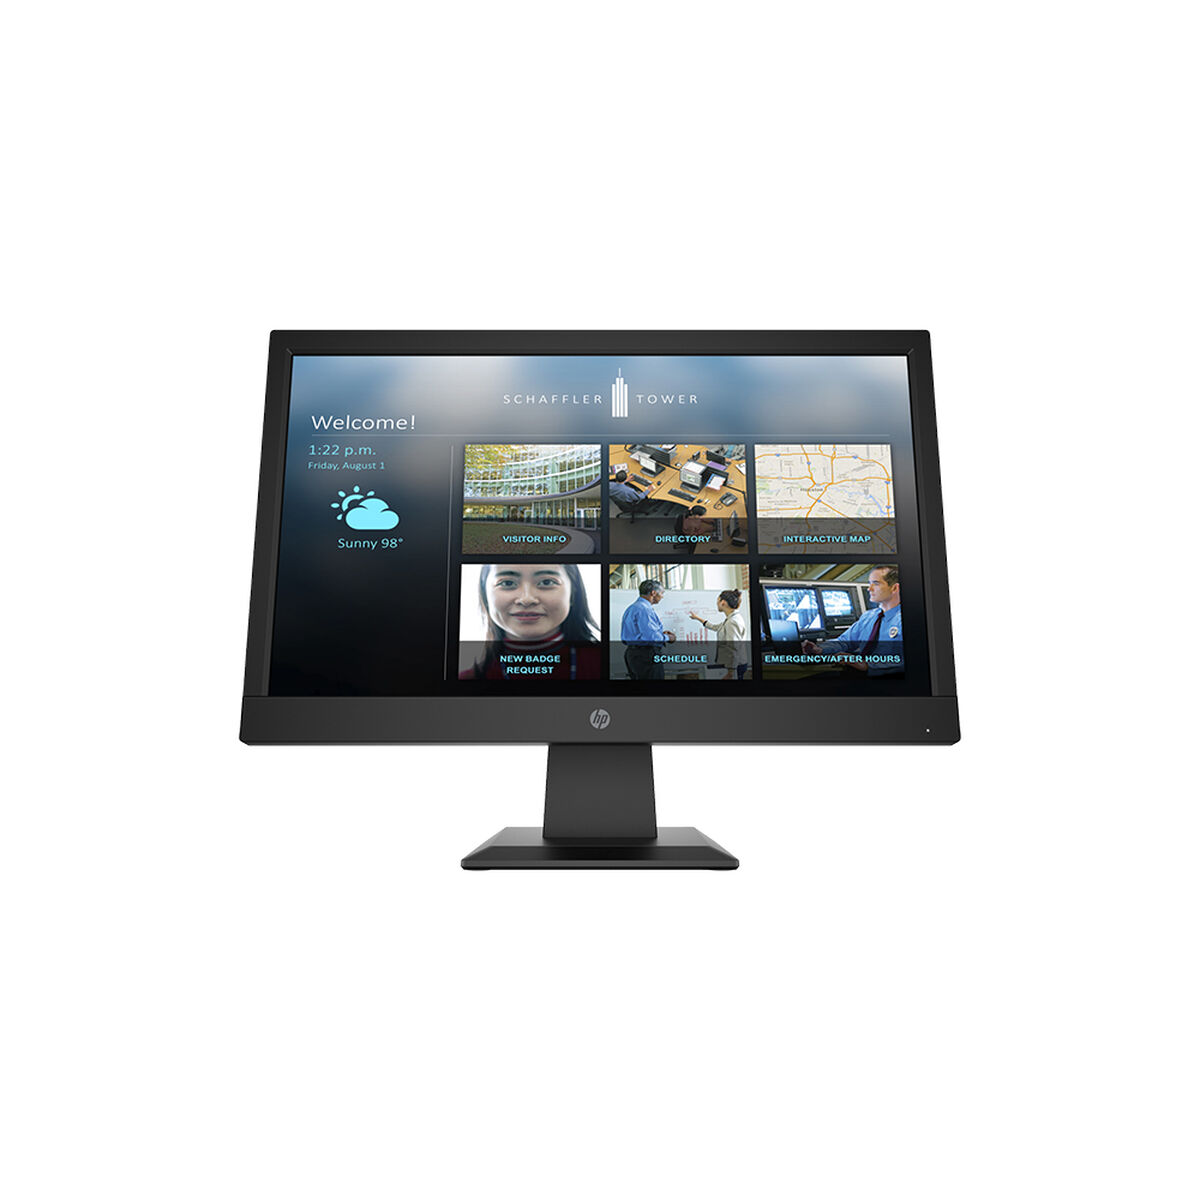 Monitor HP P19b 18.5" HD